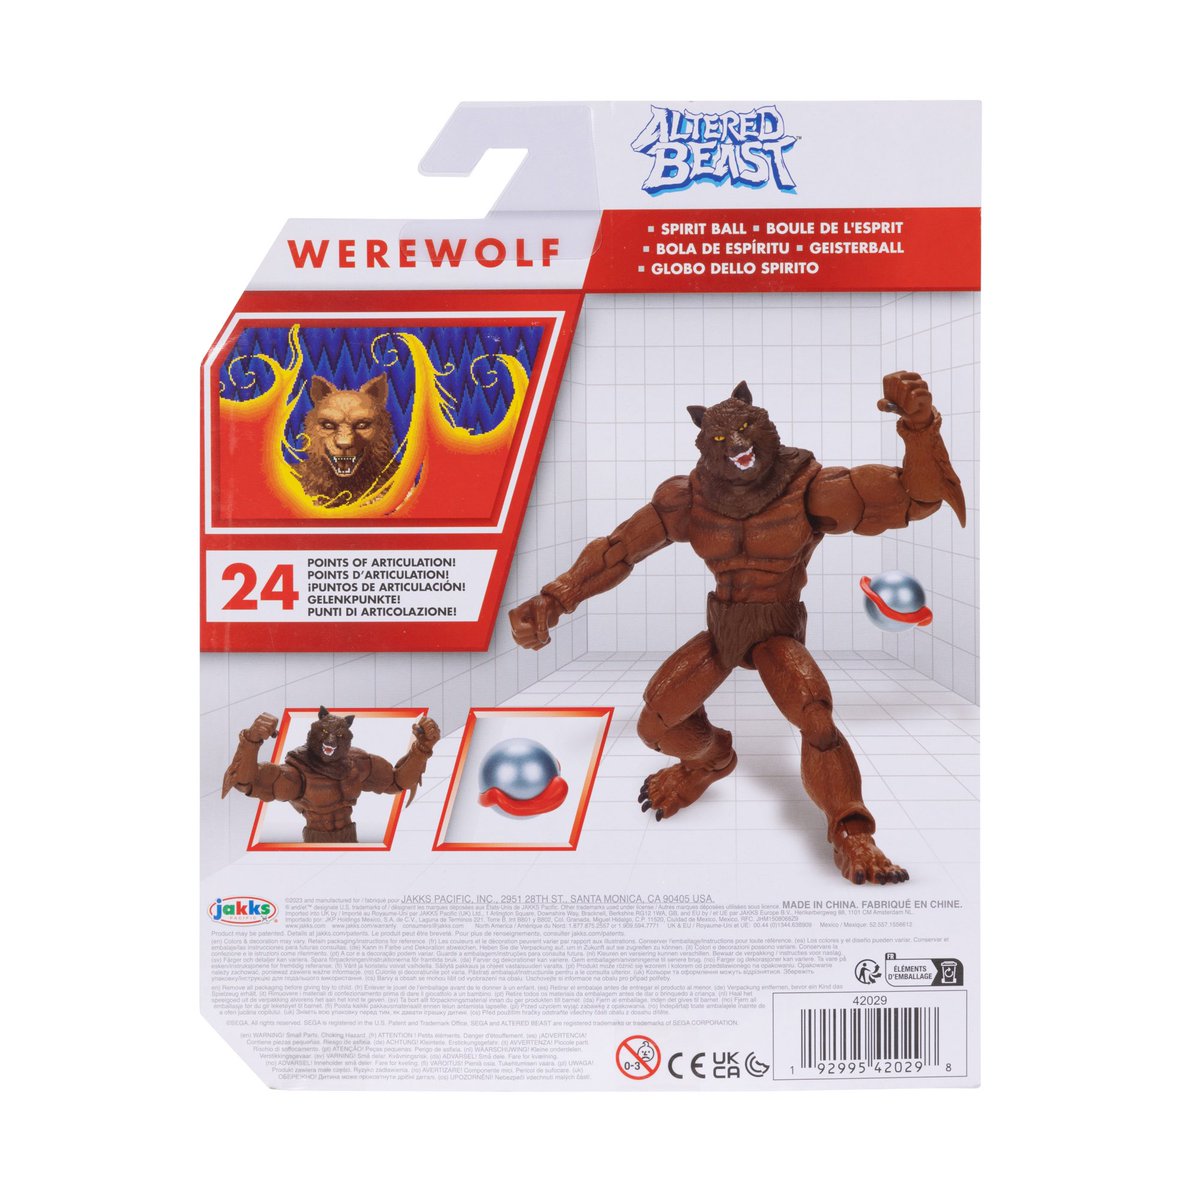 Jakks Werewolf from Altered Beast, expected soon at Walmart.